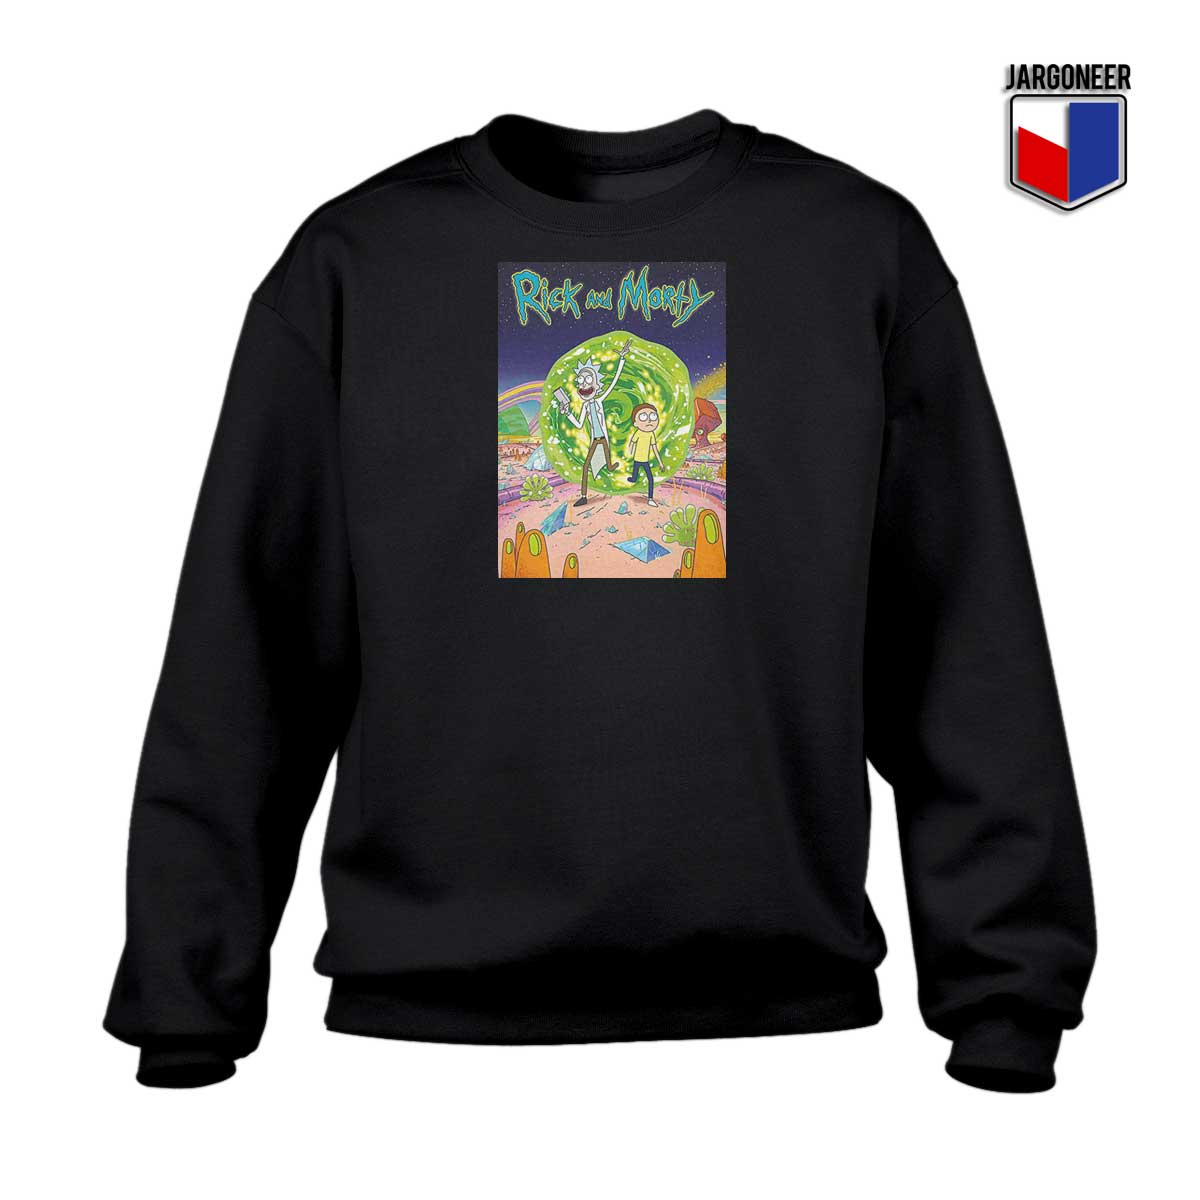 Rick and Morty TV Series Sweatshirt - Shop Unique Graphic Cool Shirt Designs